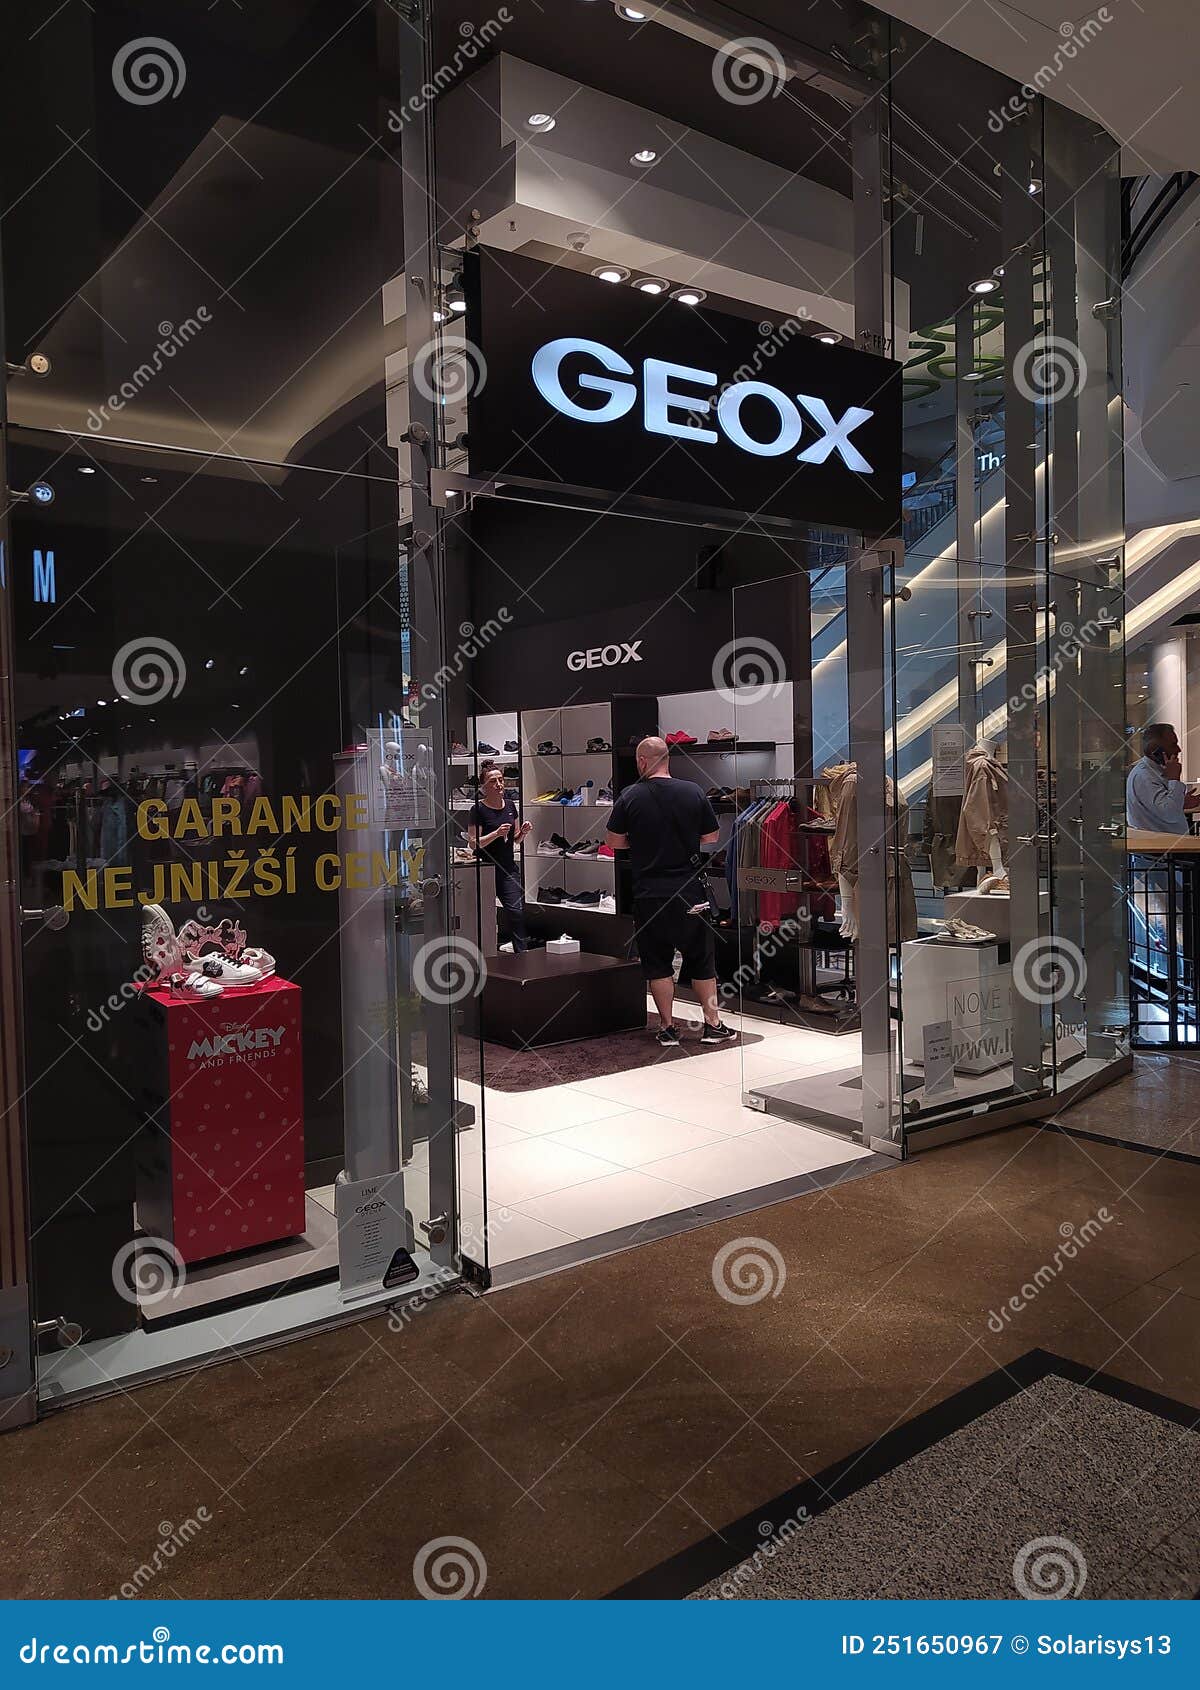 Tienda geox praga czech Imagen de italiano - 251650967